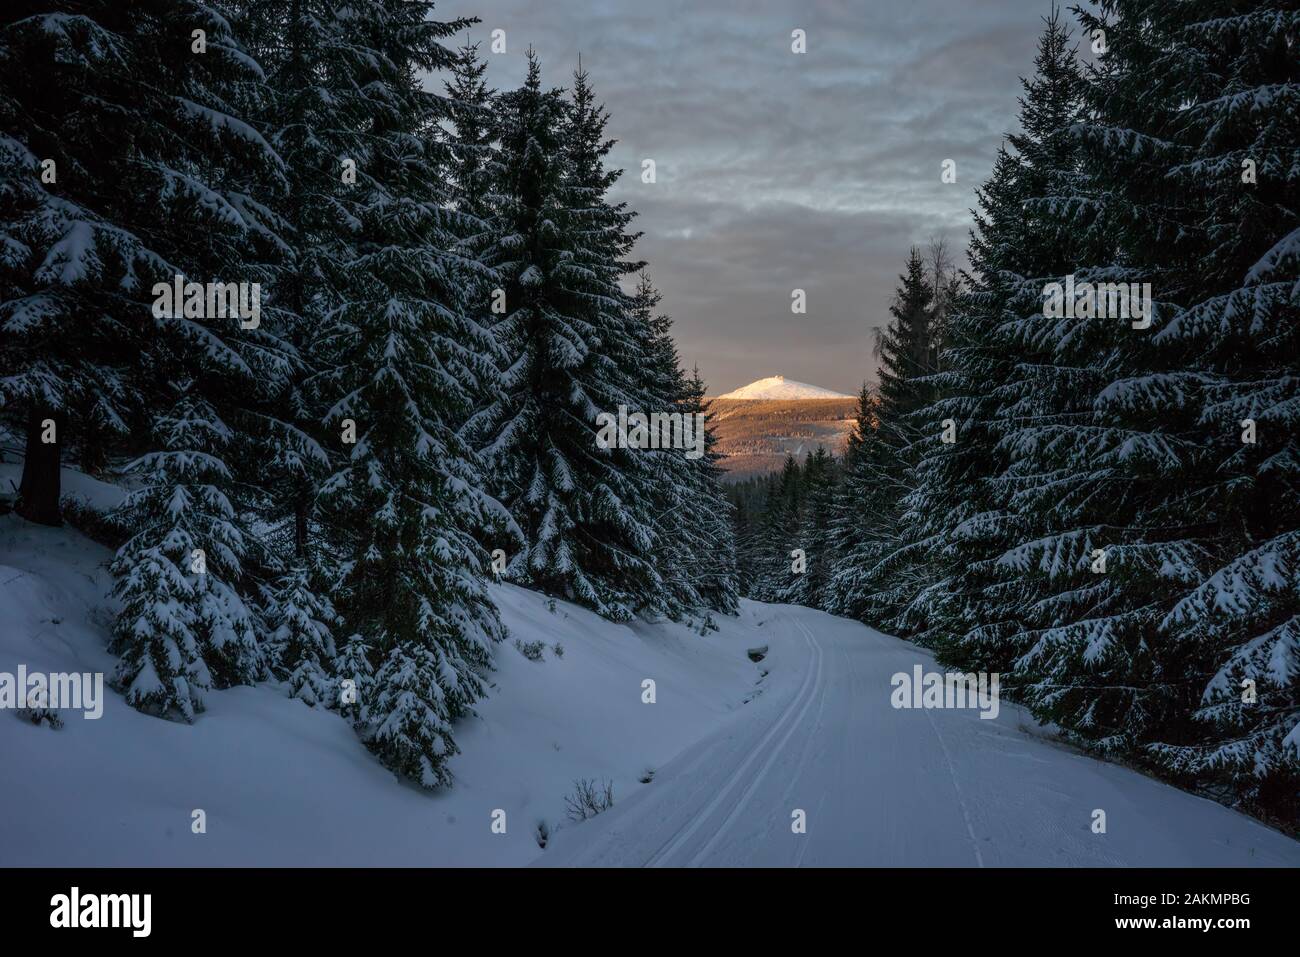 Sniezka summit in Karkonosze mountains in sunset light with snowy trees on foreground Stock Photo